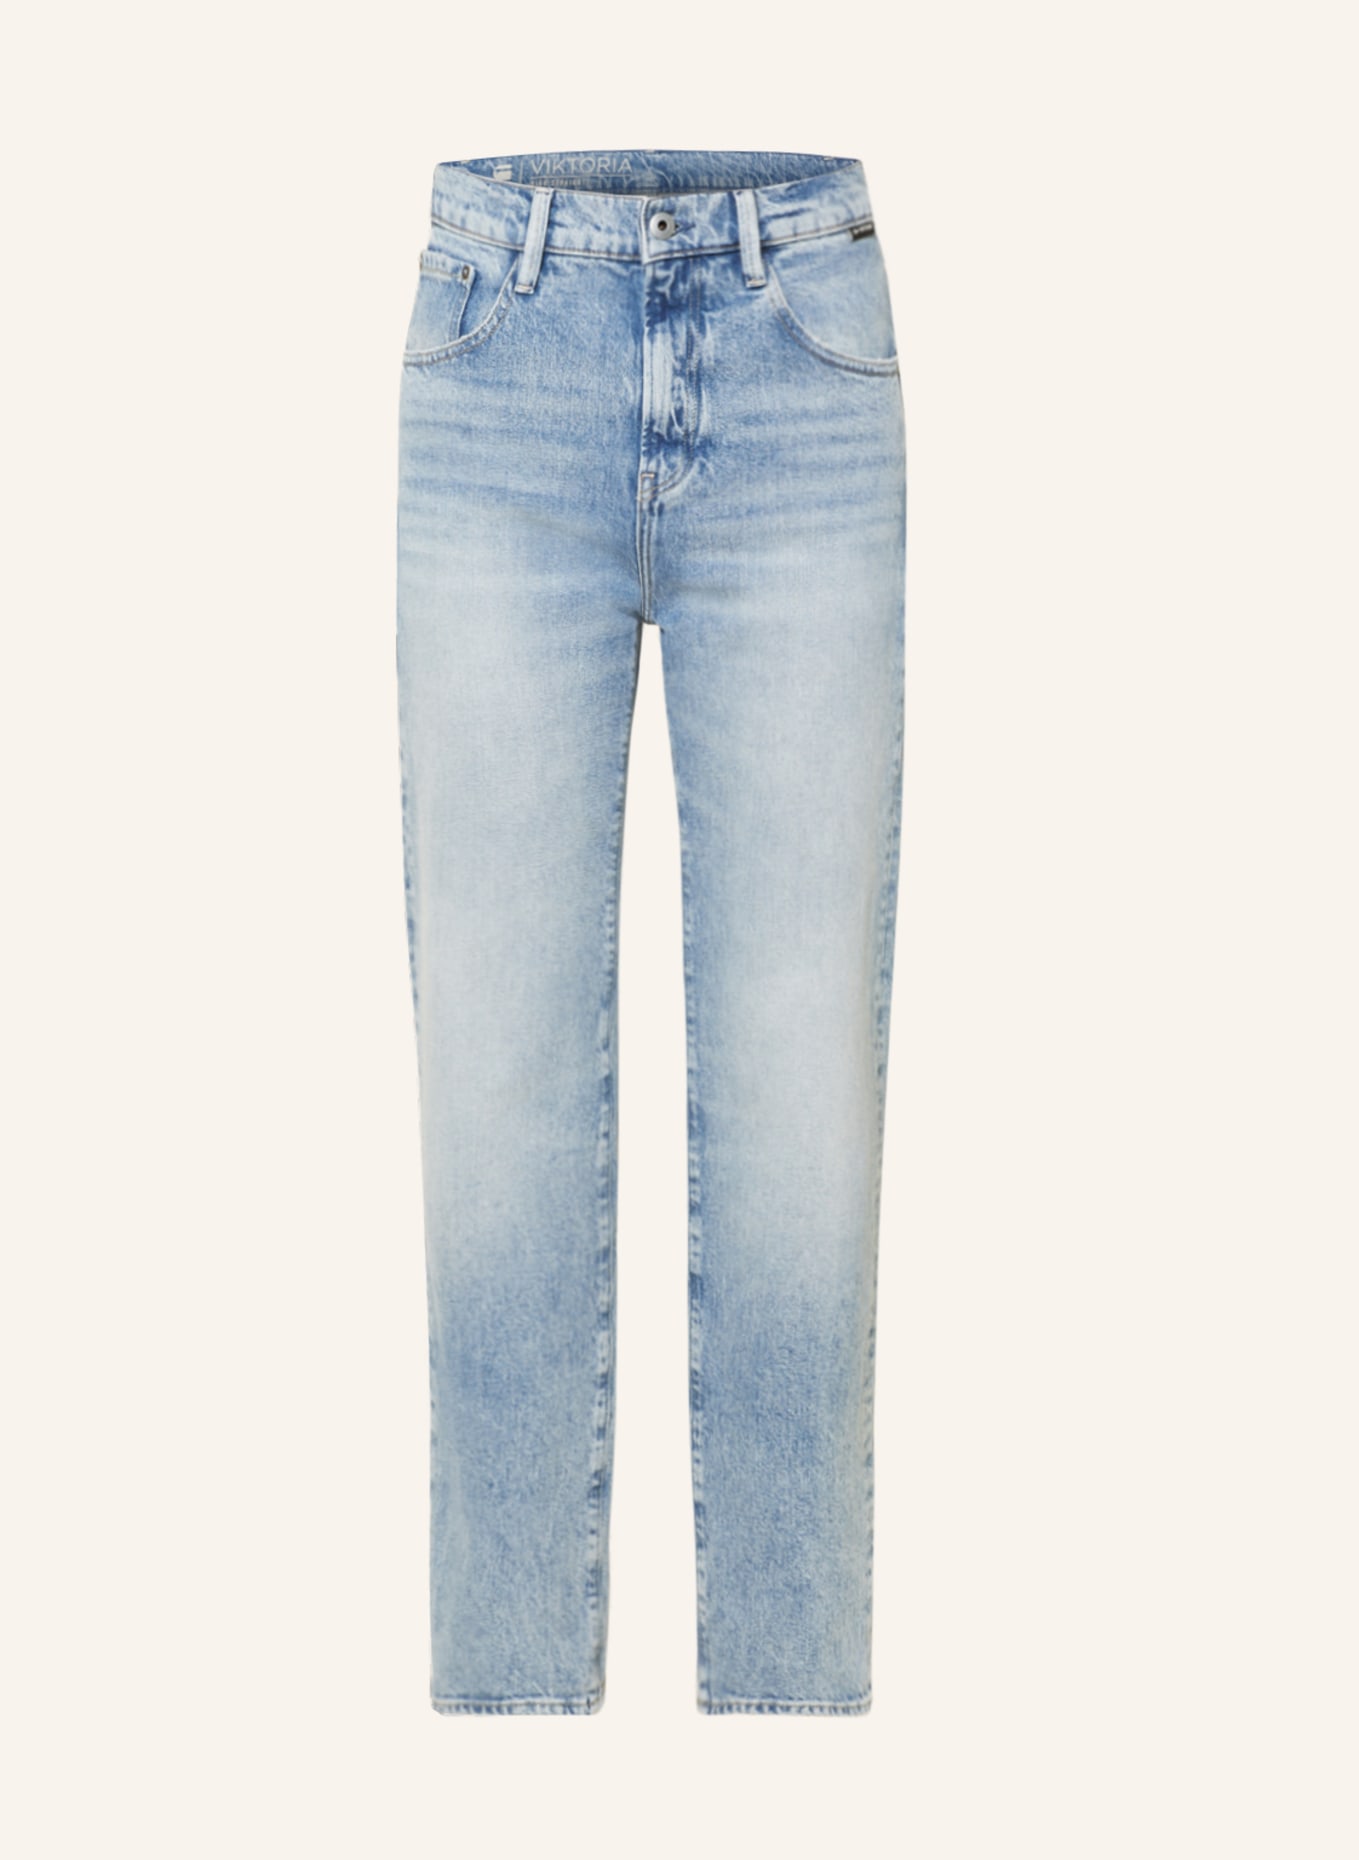 G-Star RAW Straight Jeans VIKTORIA, Farbe: D905 vintage olympic blue (Bild 1)